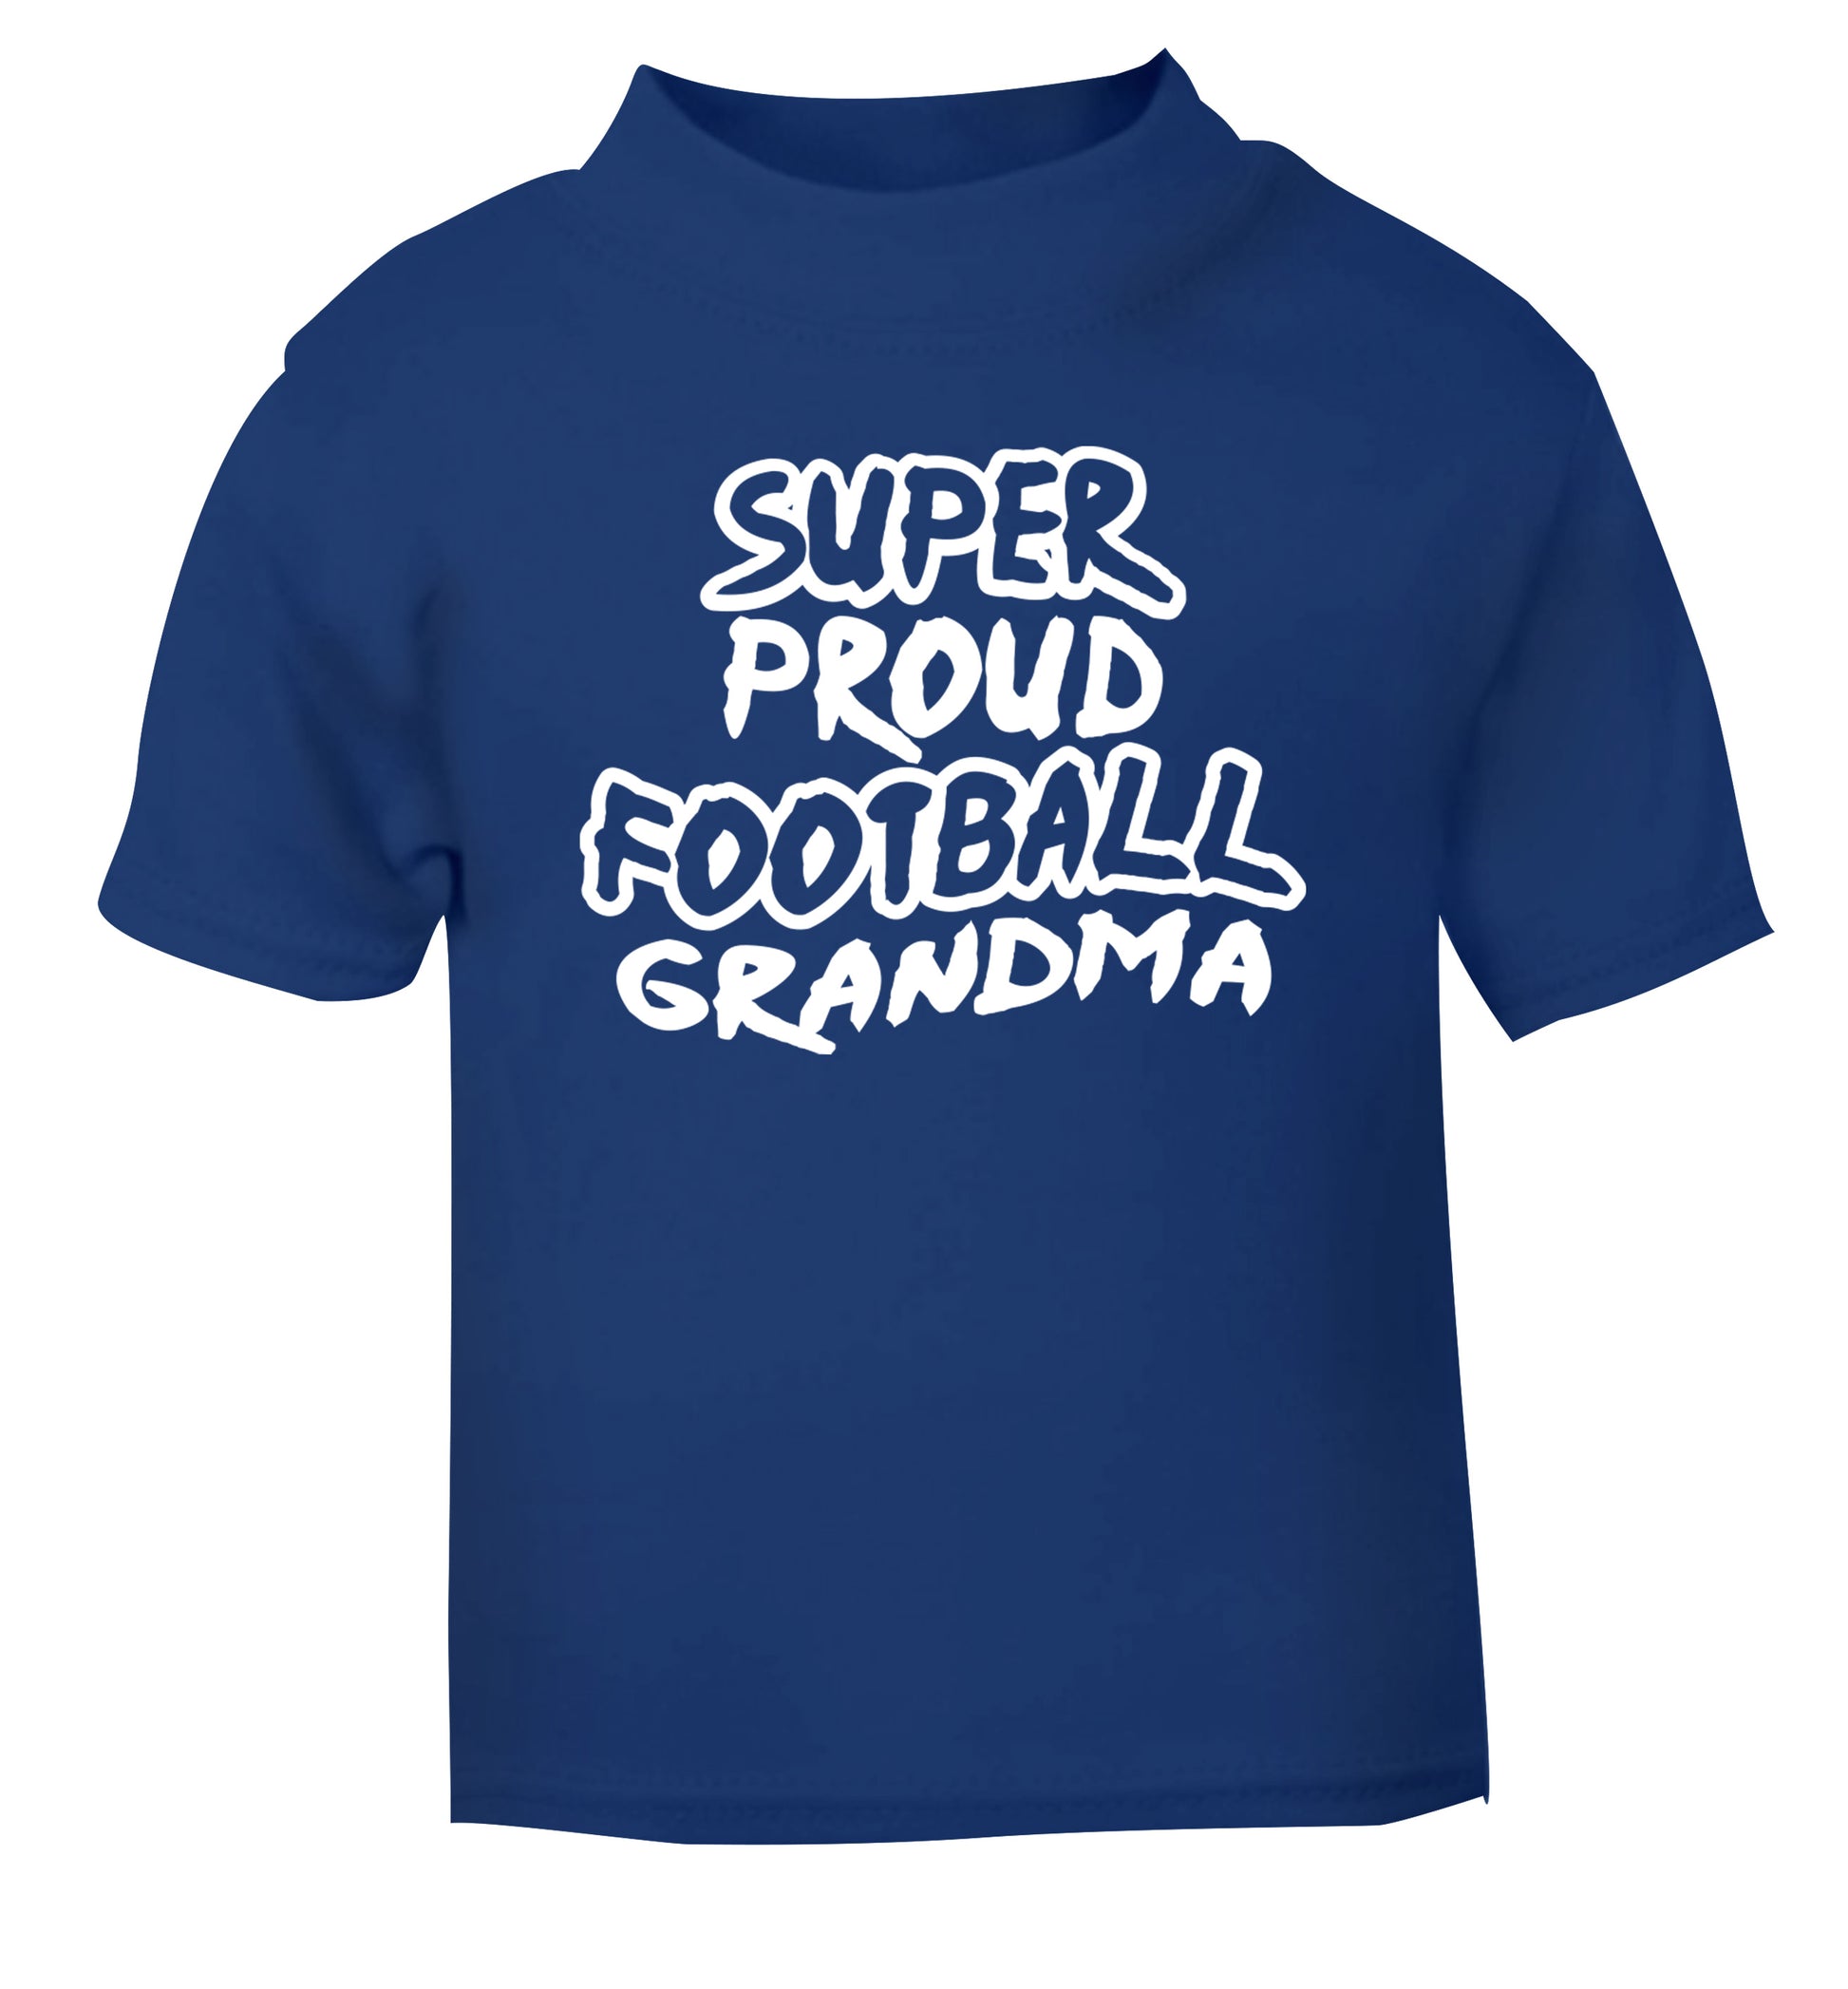 Super proud football grandma blue Baby Toddler Tshirt 2 Years